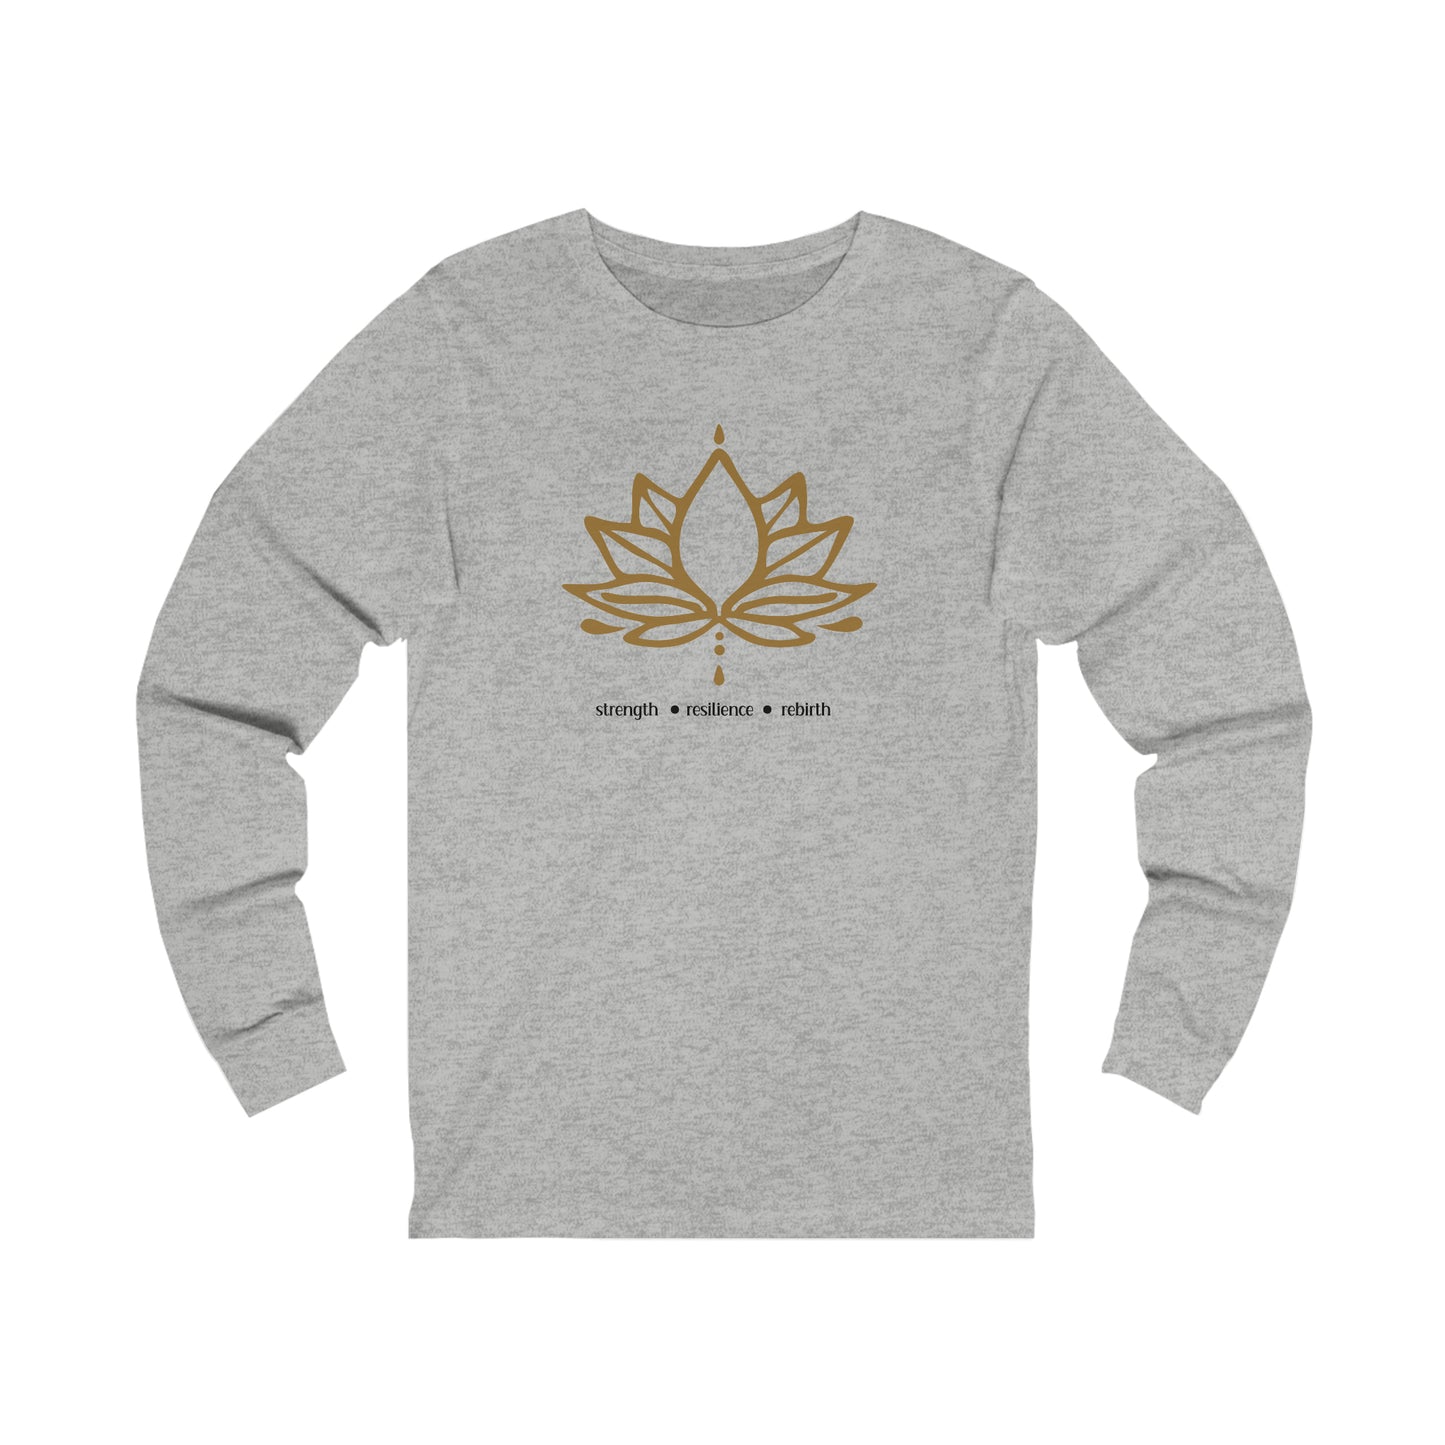 Lotus Flower (Strength, Resilience, Rebirth) | Long Sleeve